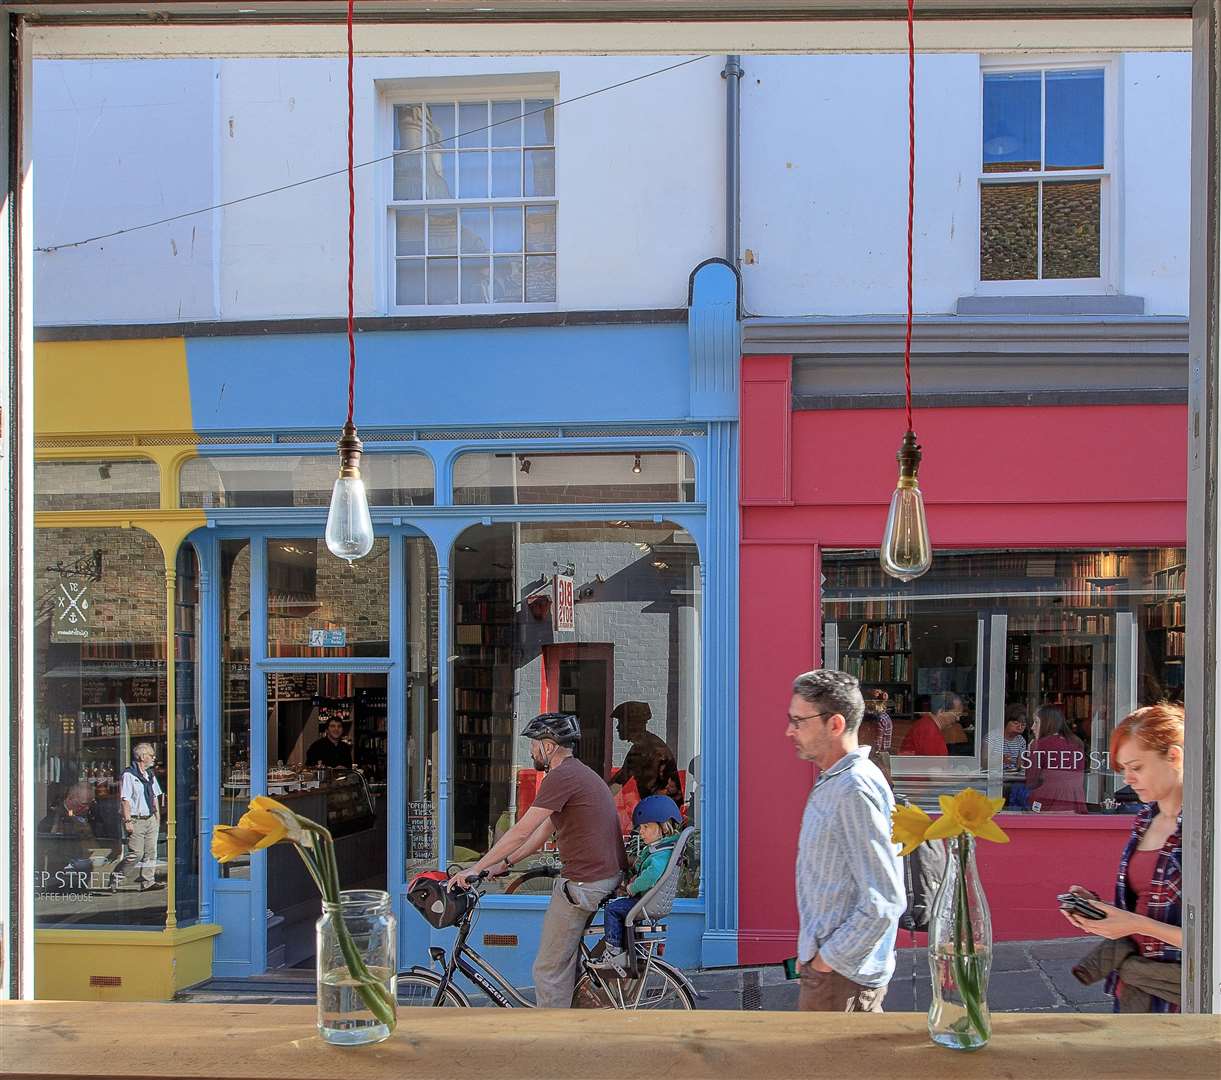 Folkestone Creative Quarter has transformed the Old High Street